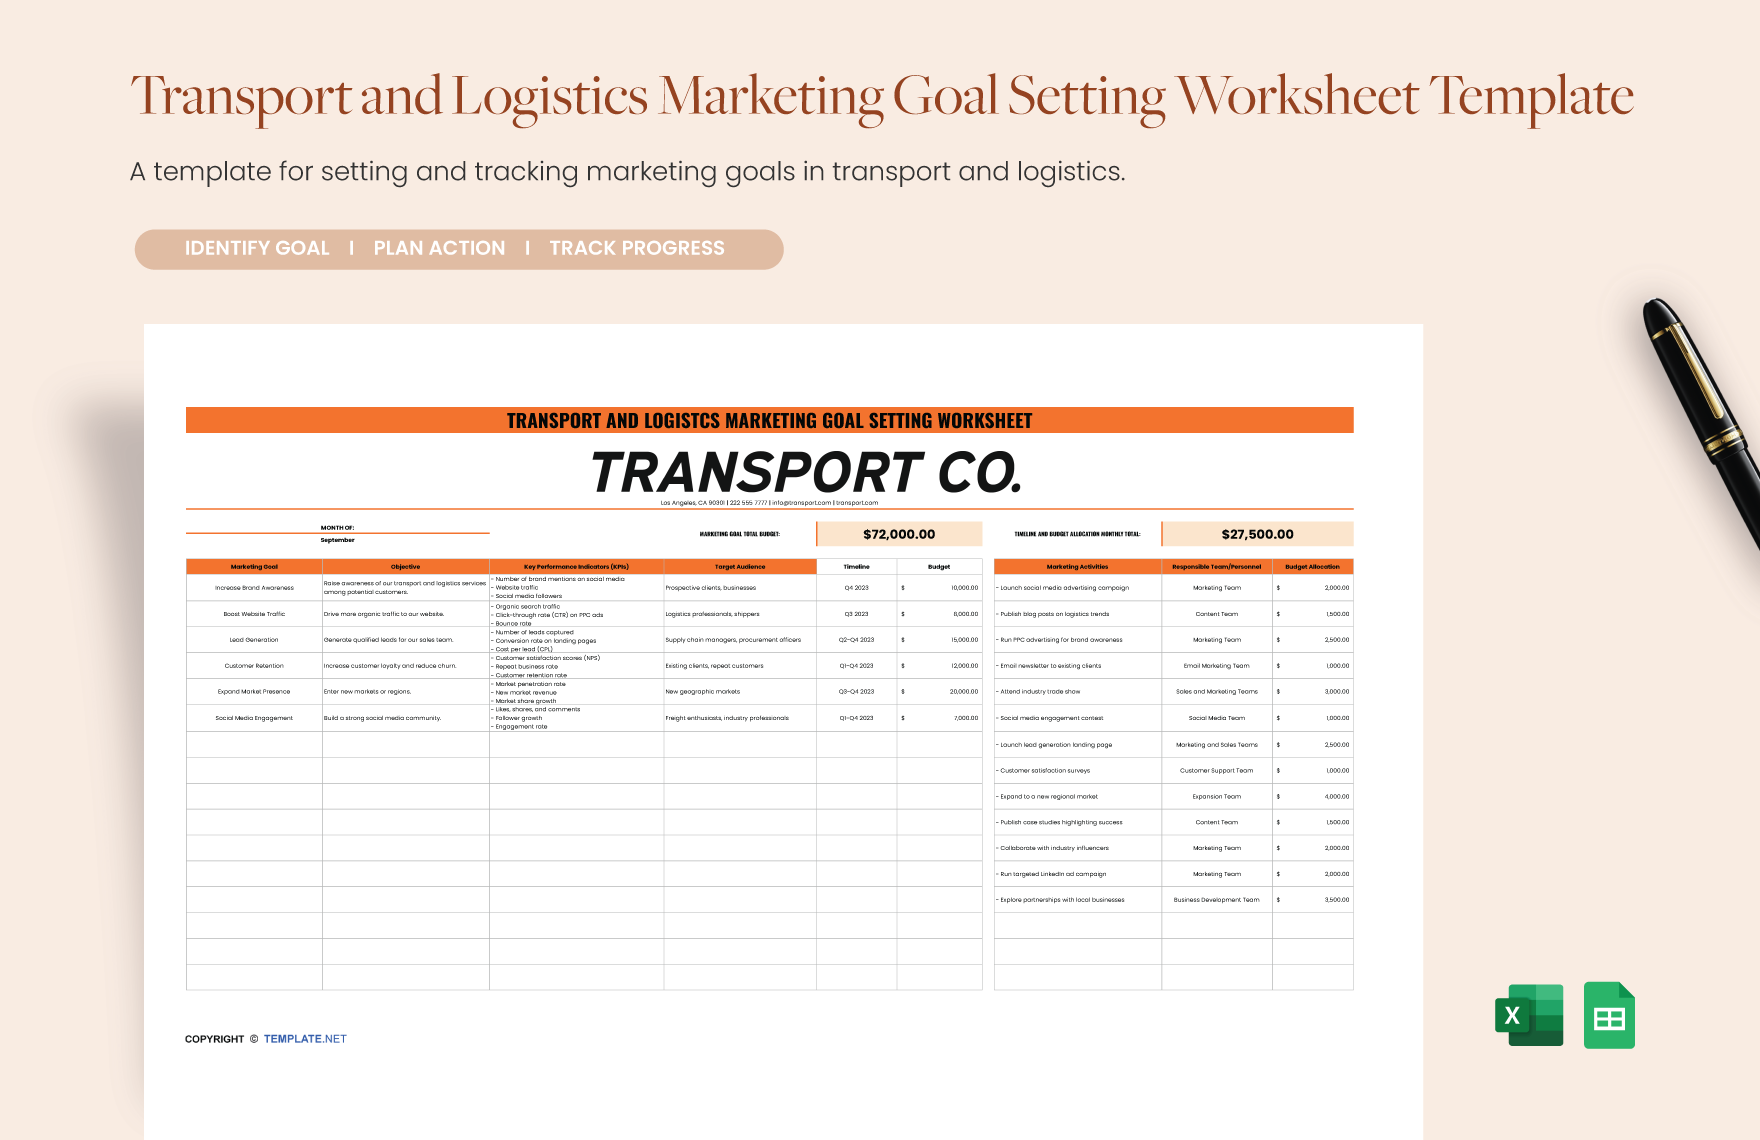 Transport and Logistics Marketing Goal Setting Worksheet Template